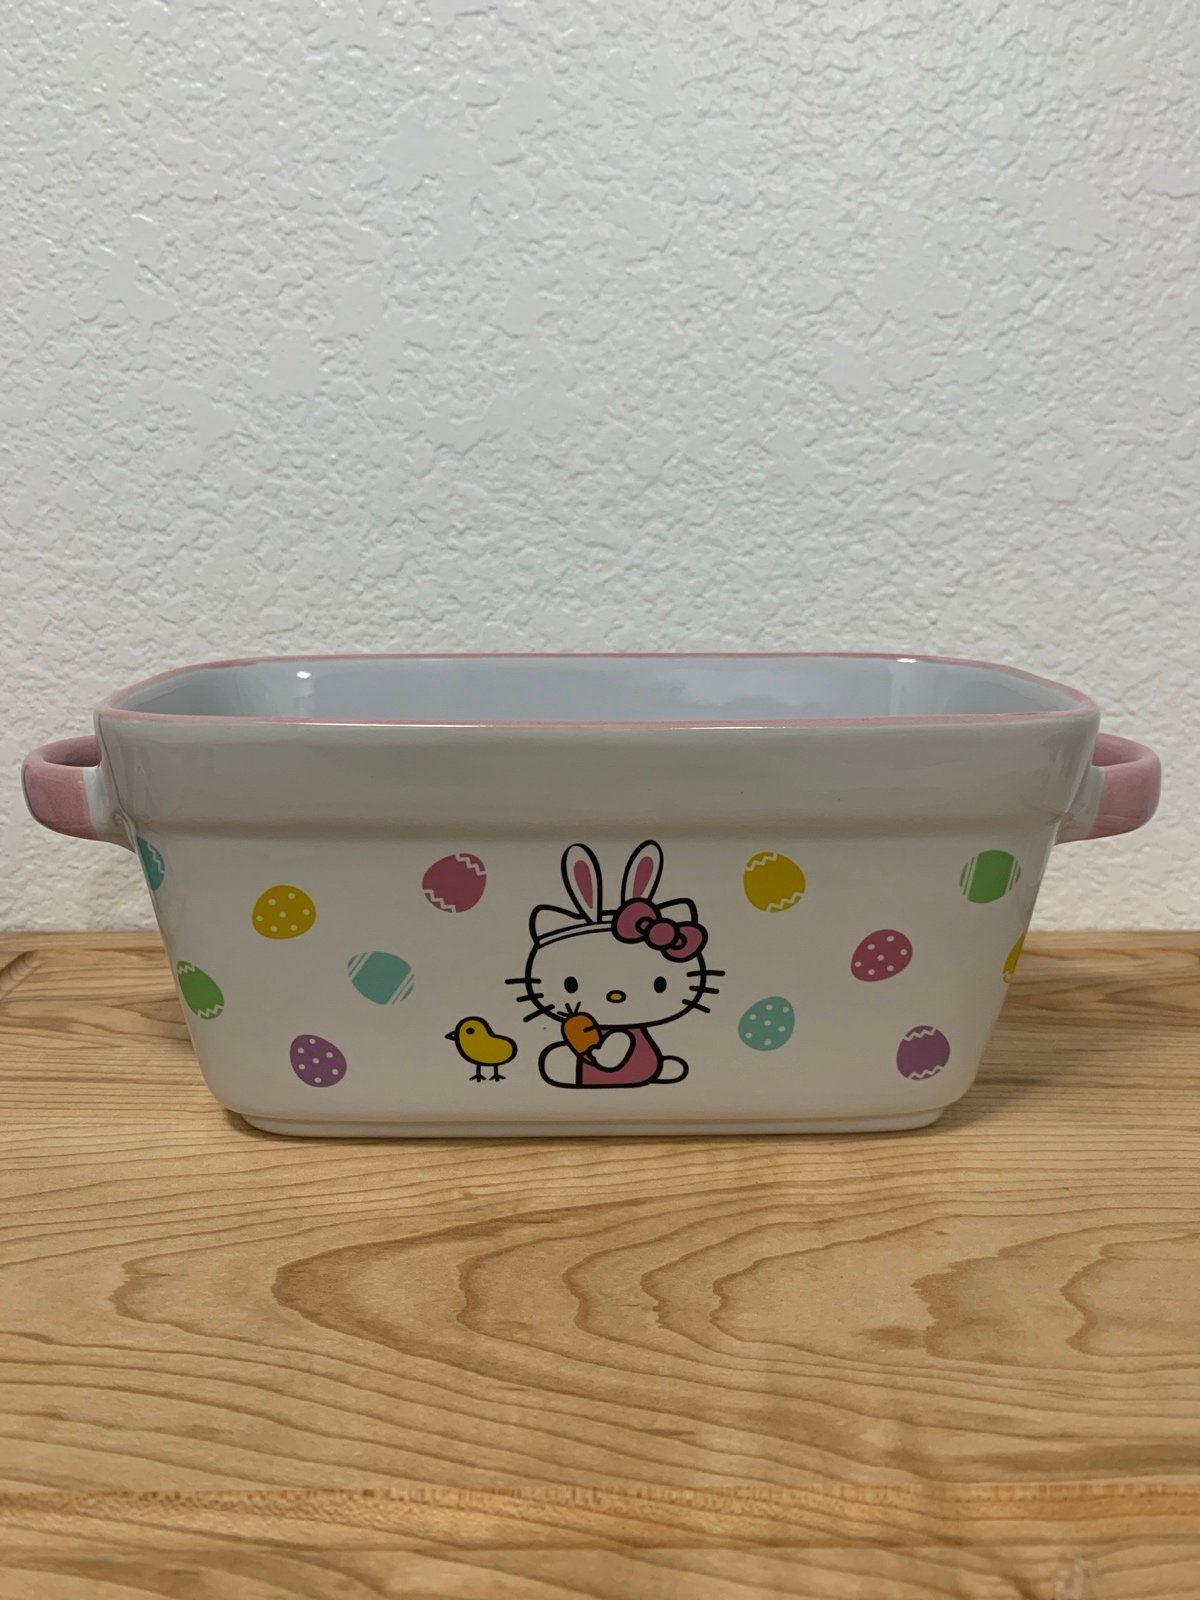 Hello Kitty Easter Bunny Spring Bread Loaf Baking Pan By Sanrio Zrike Brands 9jVgPri5o